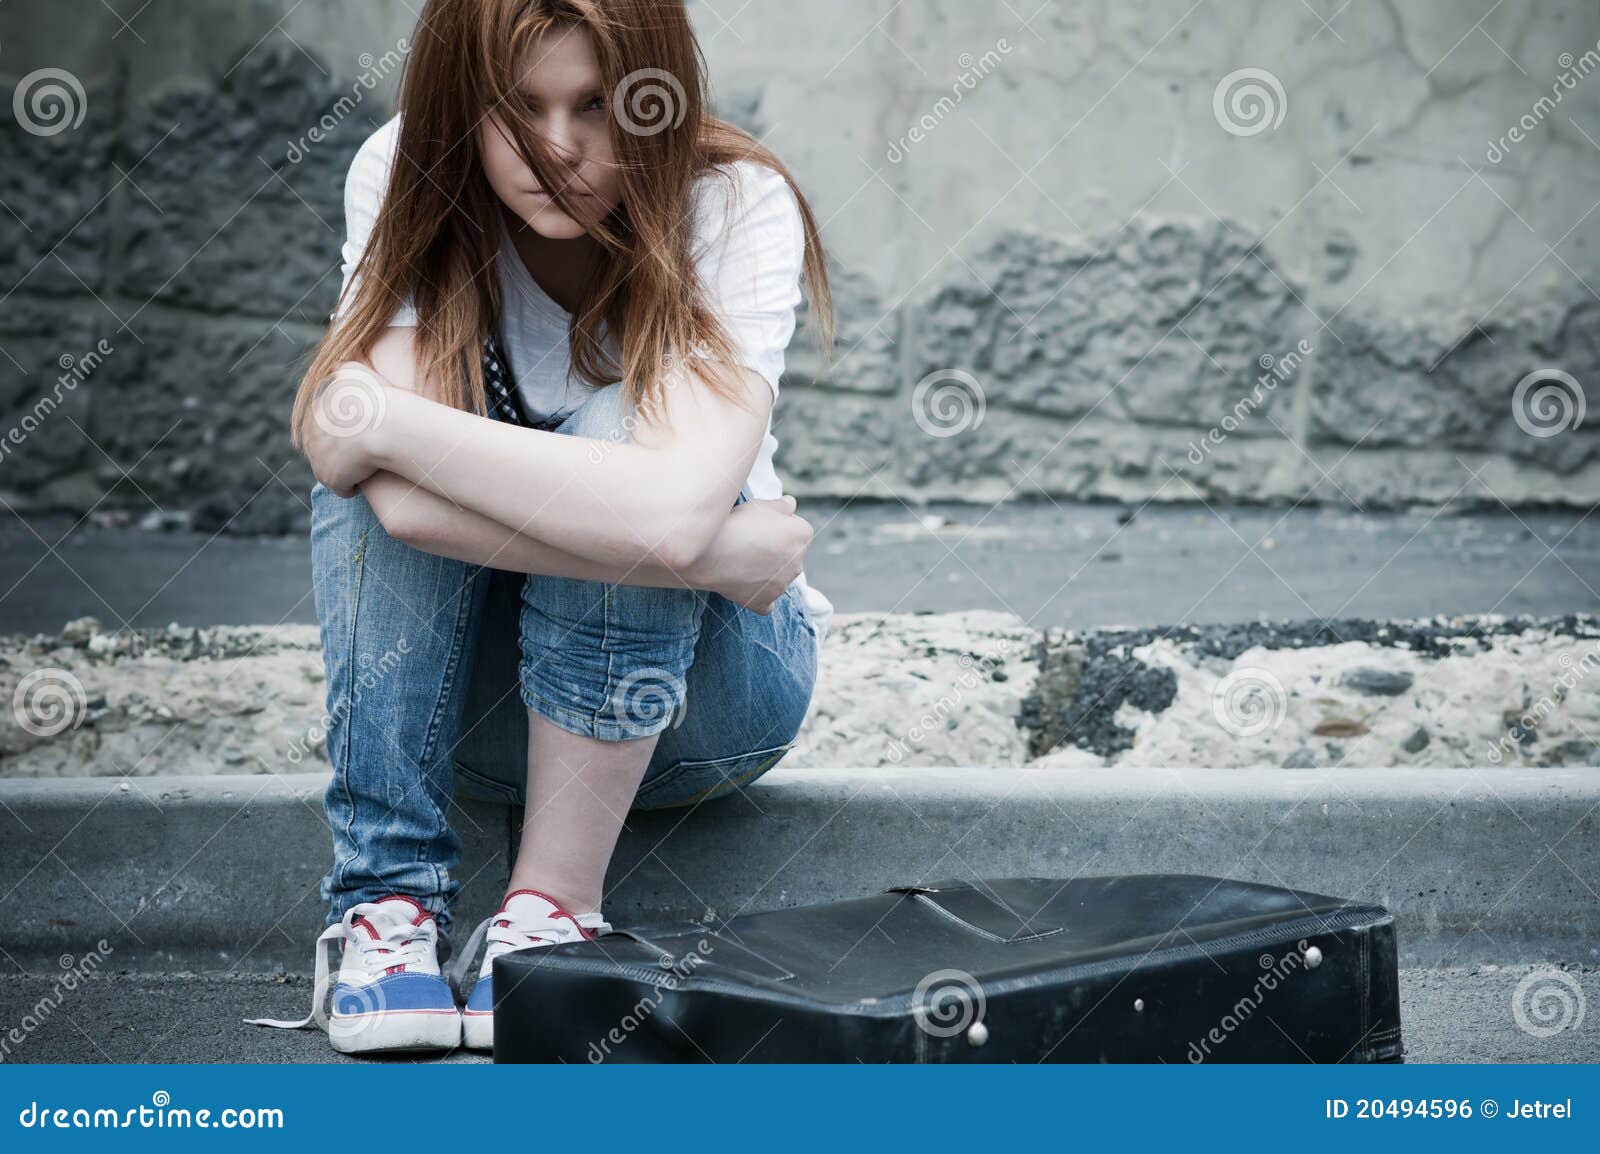 Beautiful Young Sad Girl Sitting on Asphalt Stock Photo - Image of ...